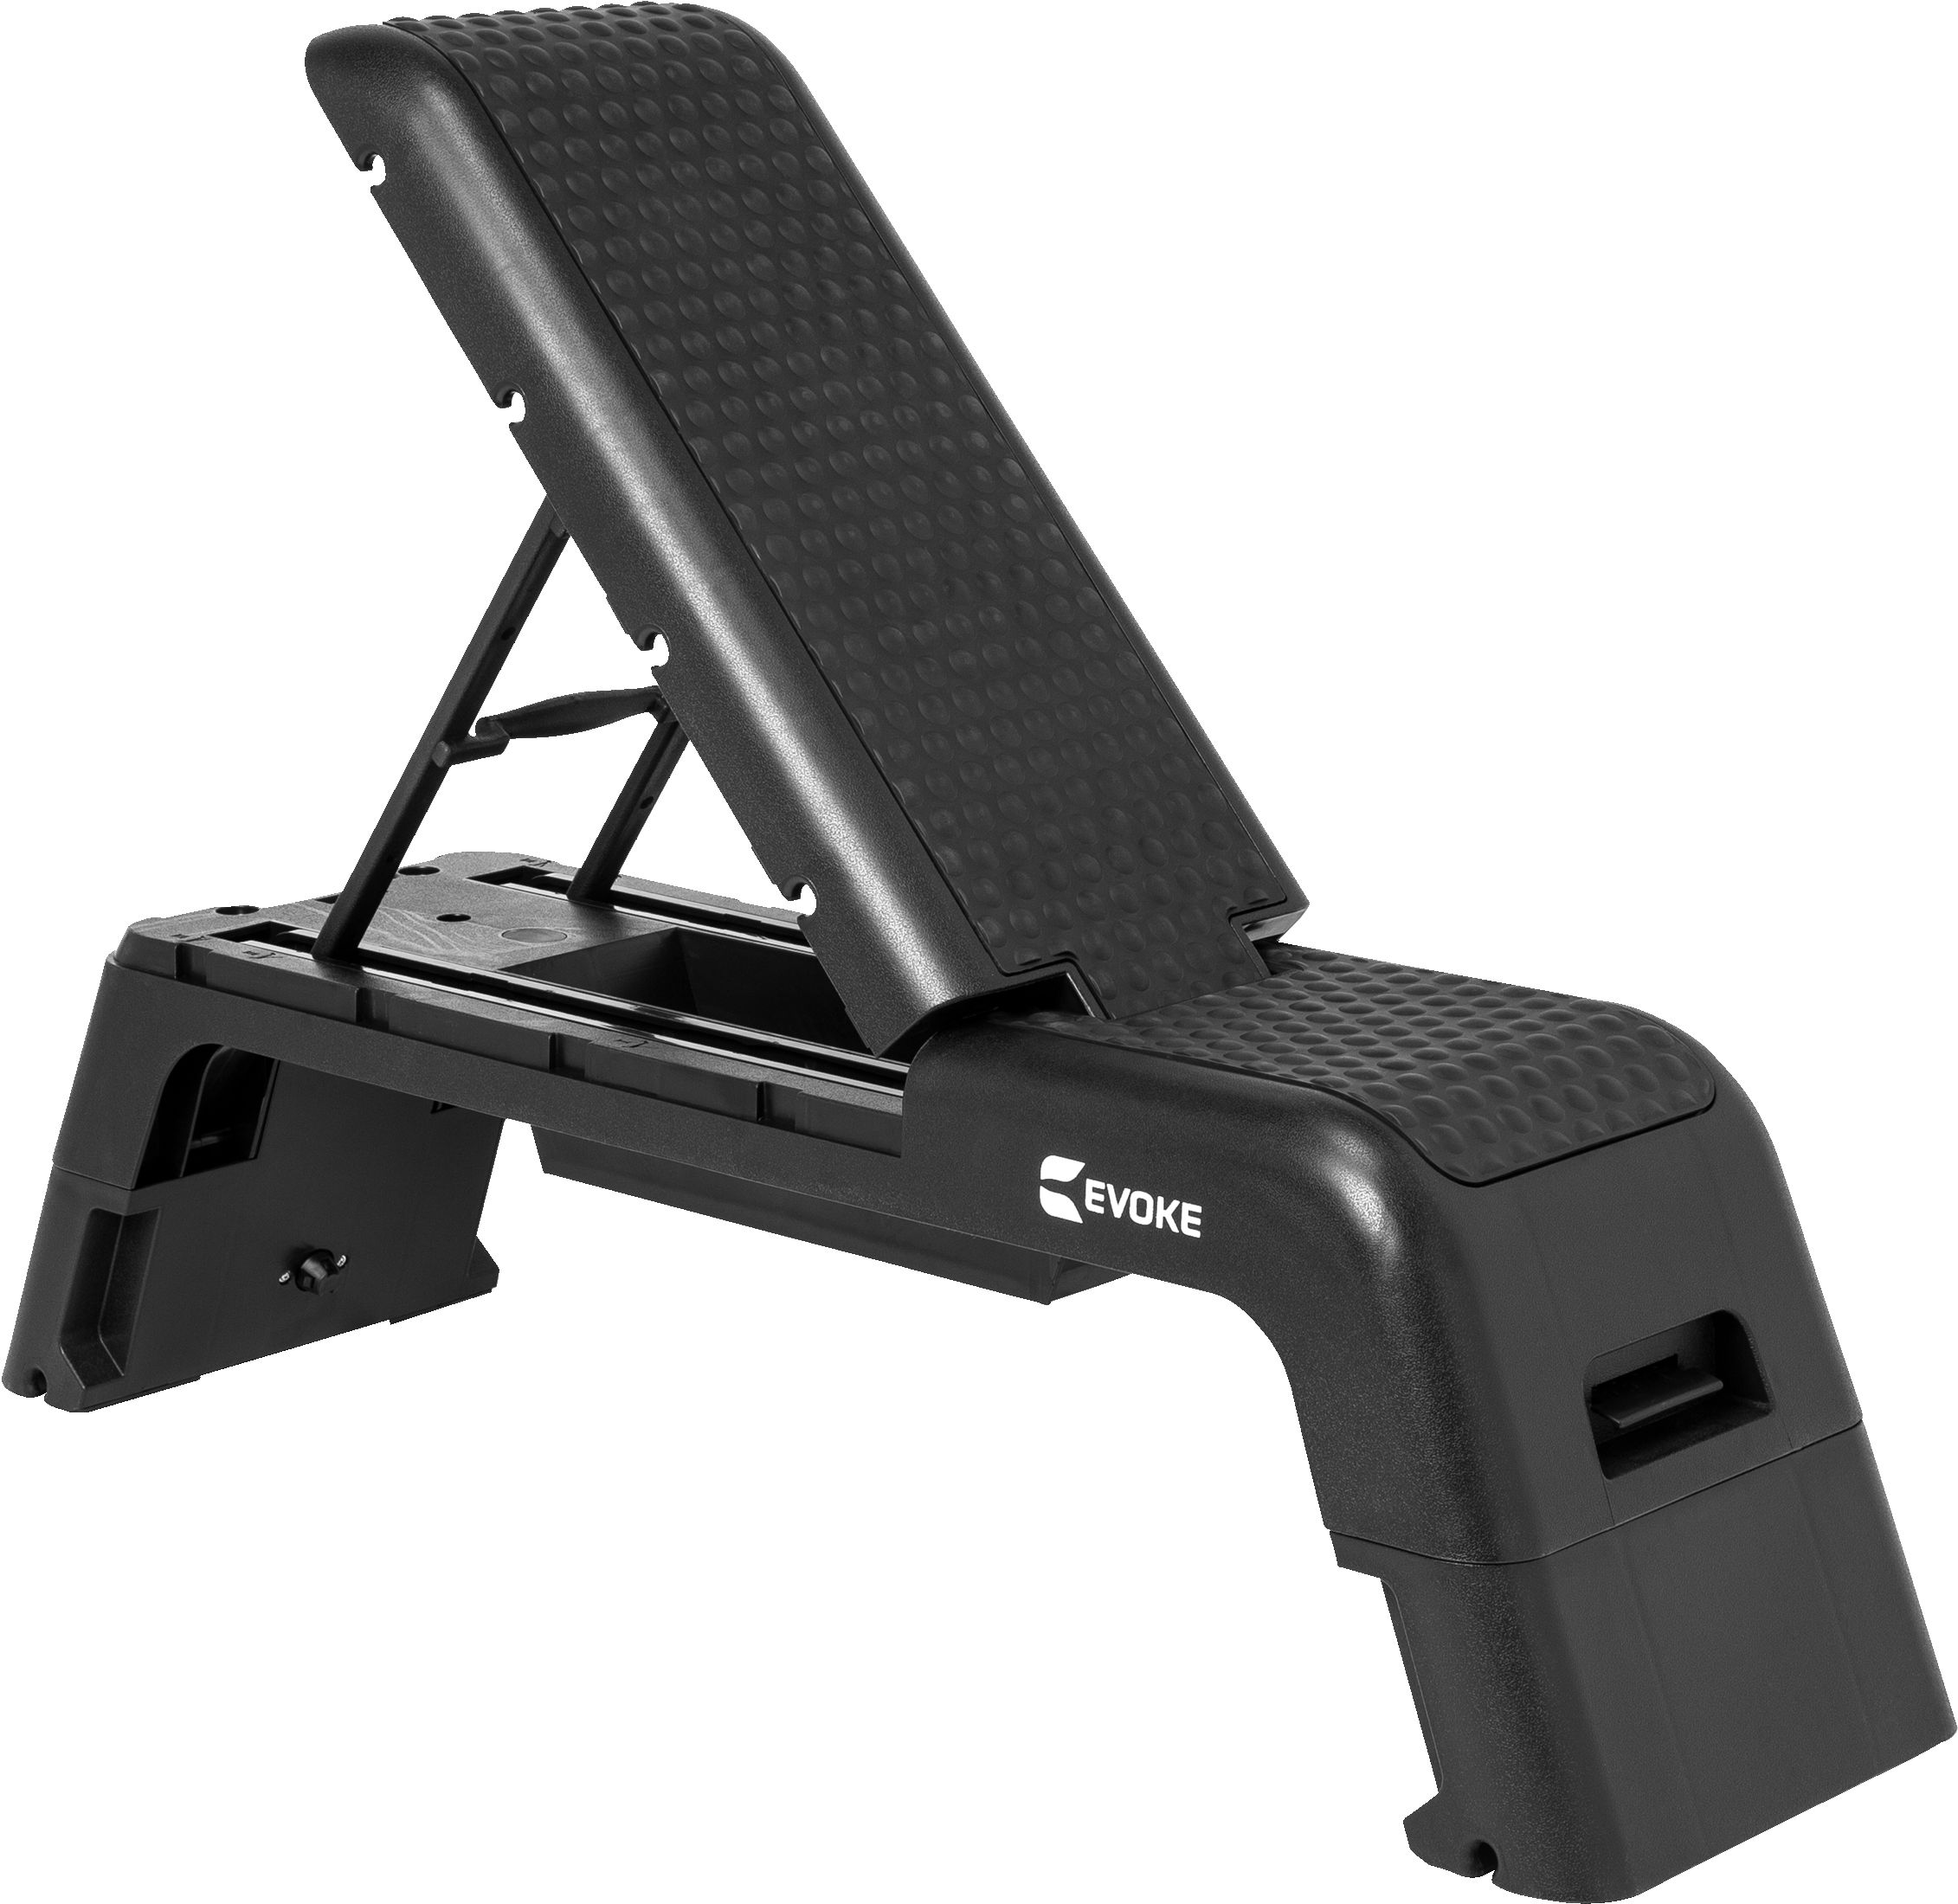 evoke adjustable fitness bench